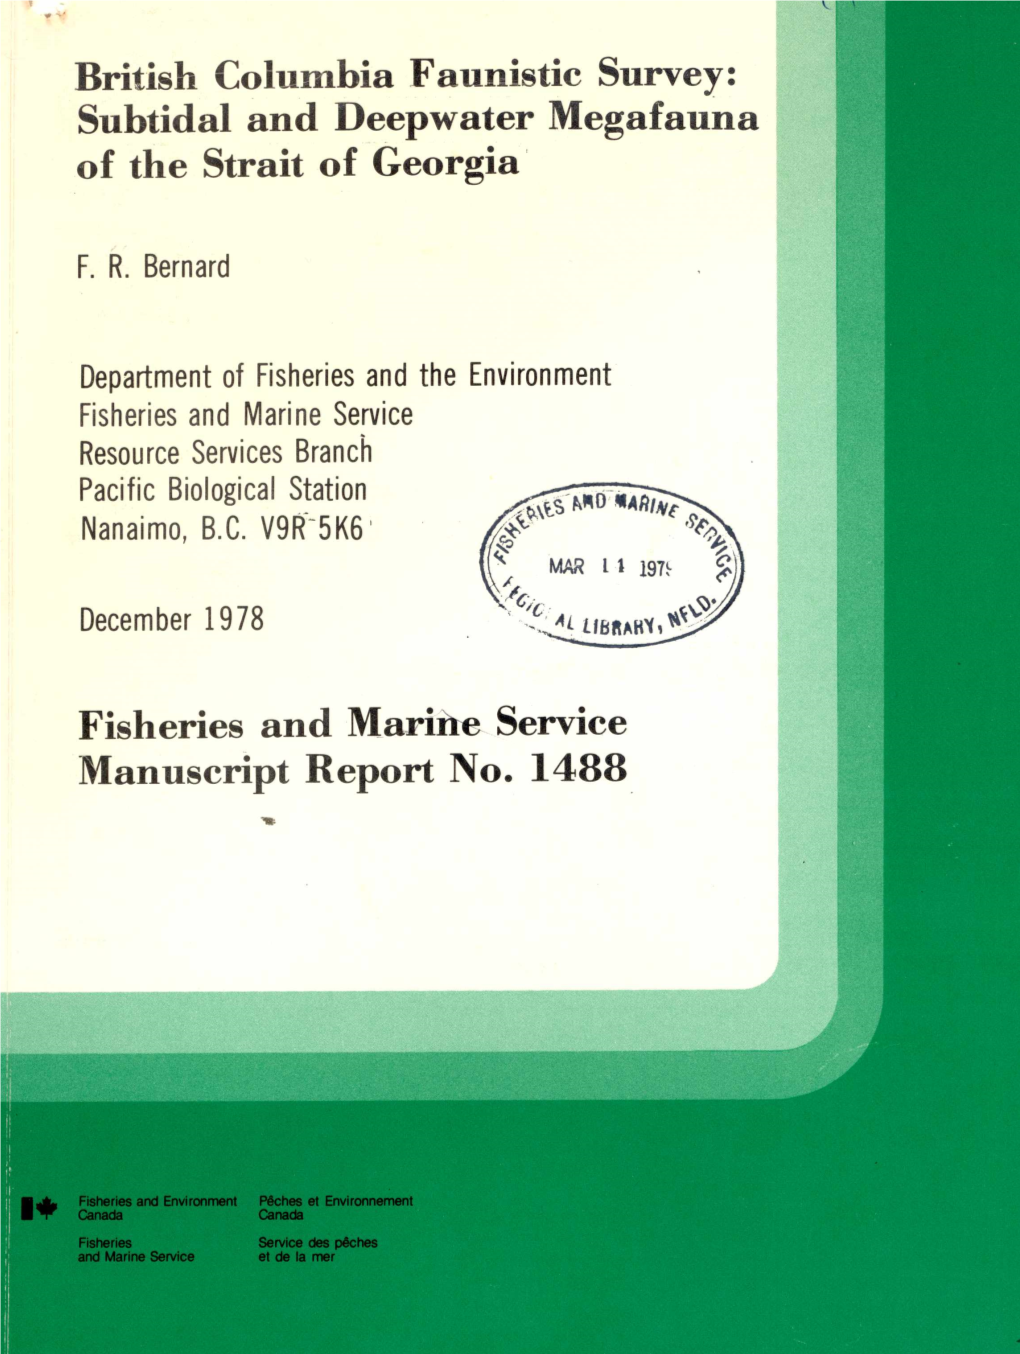 British Columbia Faunistic Survey: Subtidal and Deepwater Megafauna of the Strait of Georgia